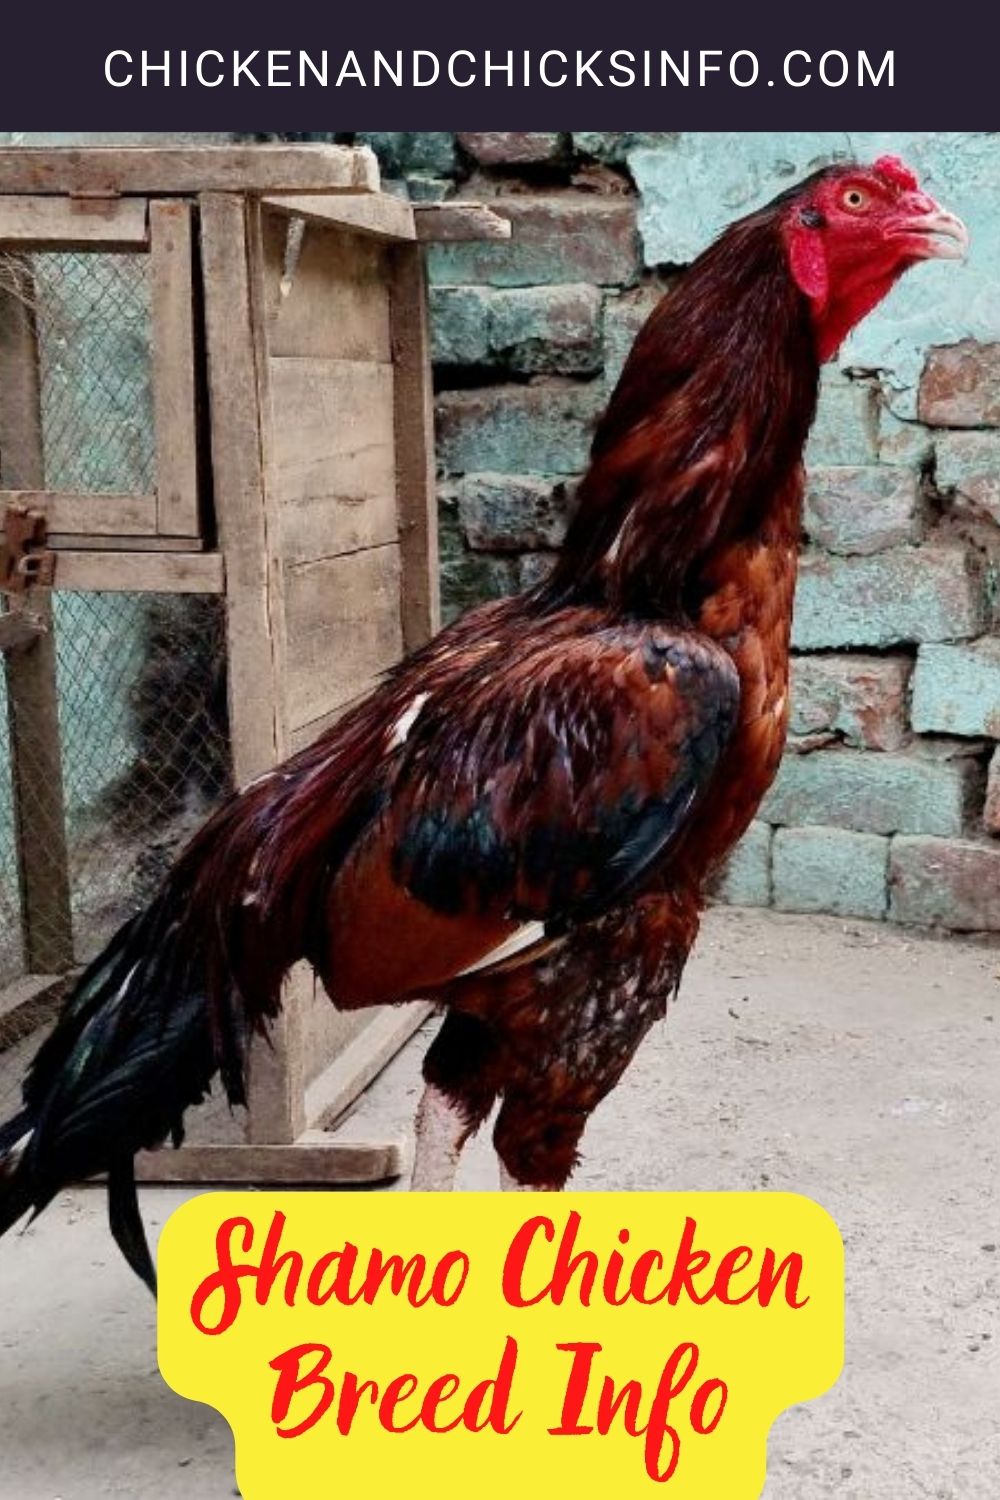 Shamo Chicken Breed Info pinterest image.